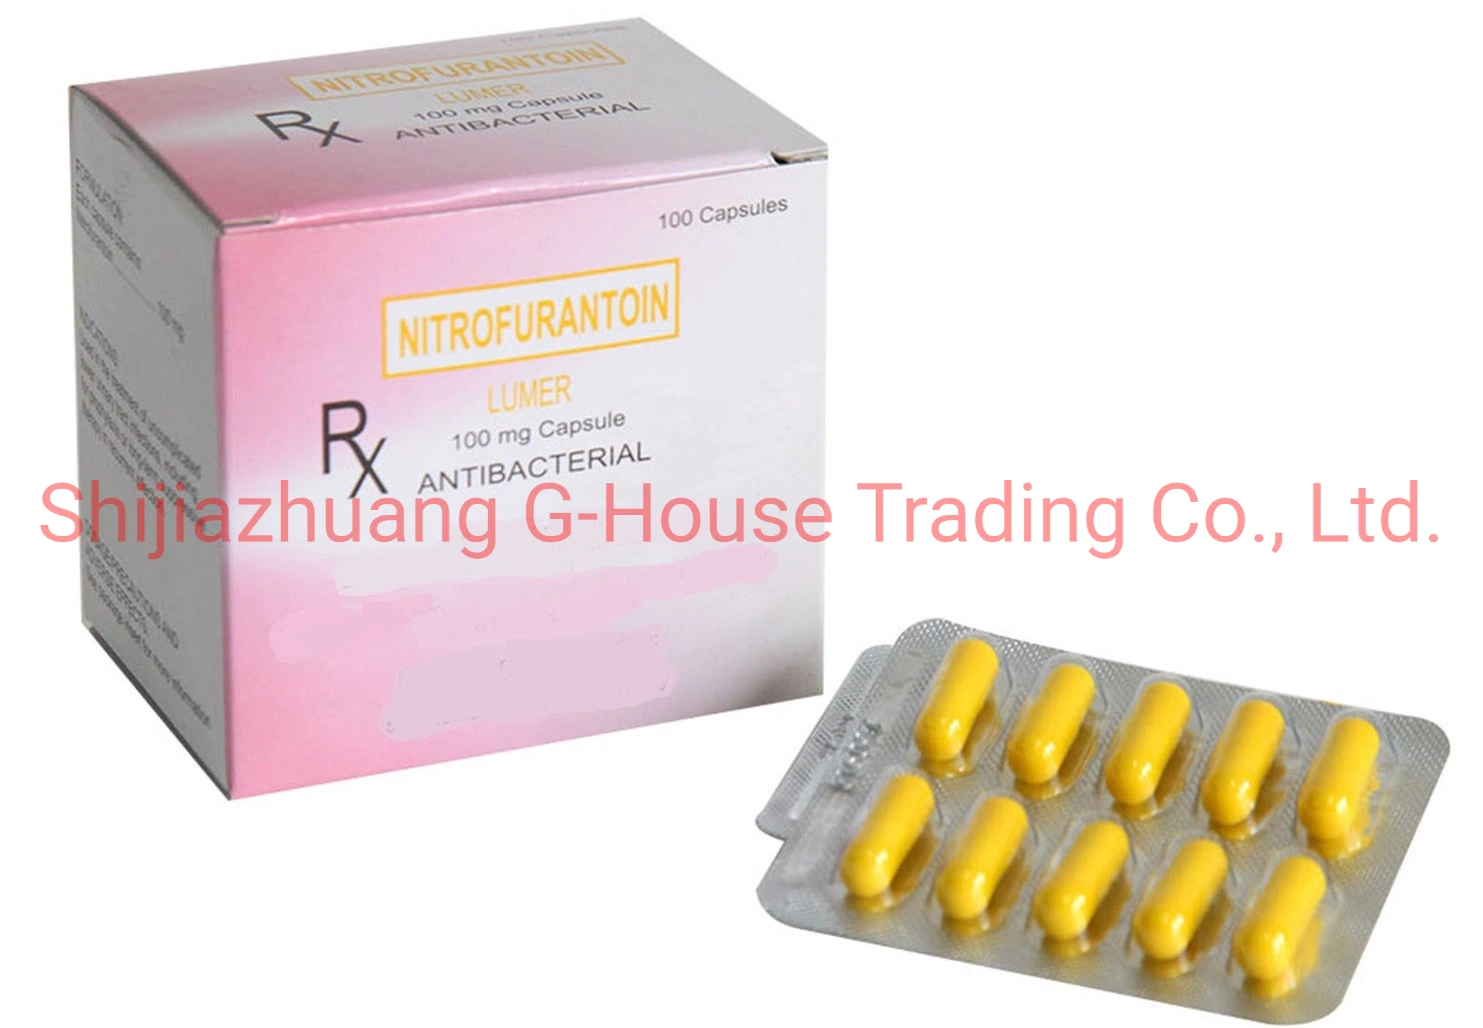 Nitrofurantoin Capsules 100mg Finished Medicine Pharmaceuticals Drug